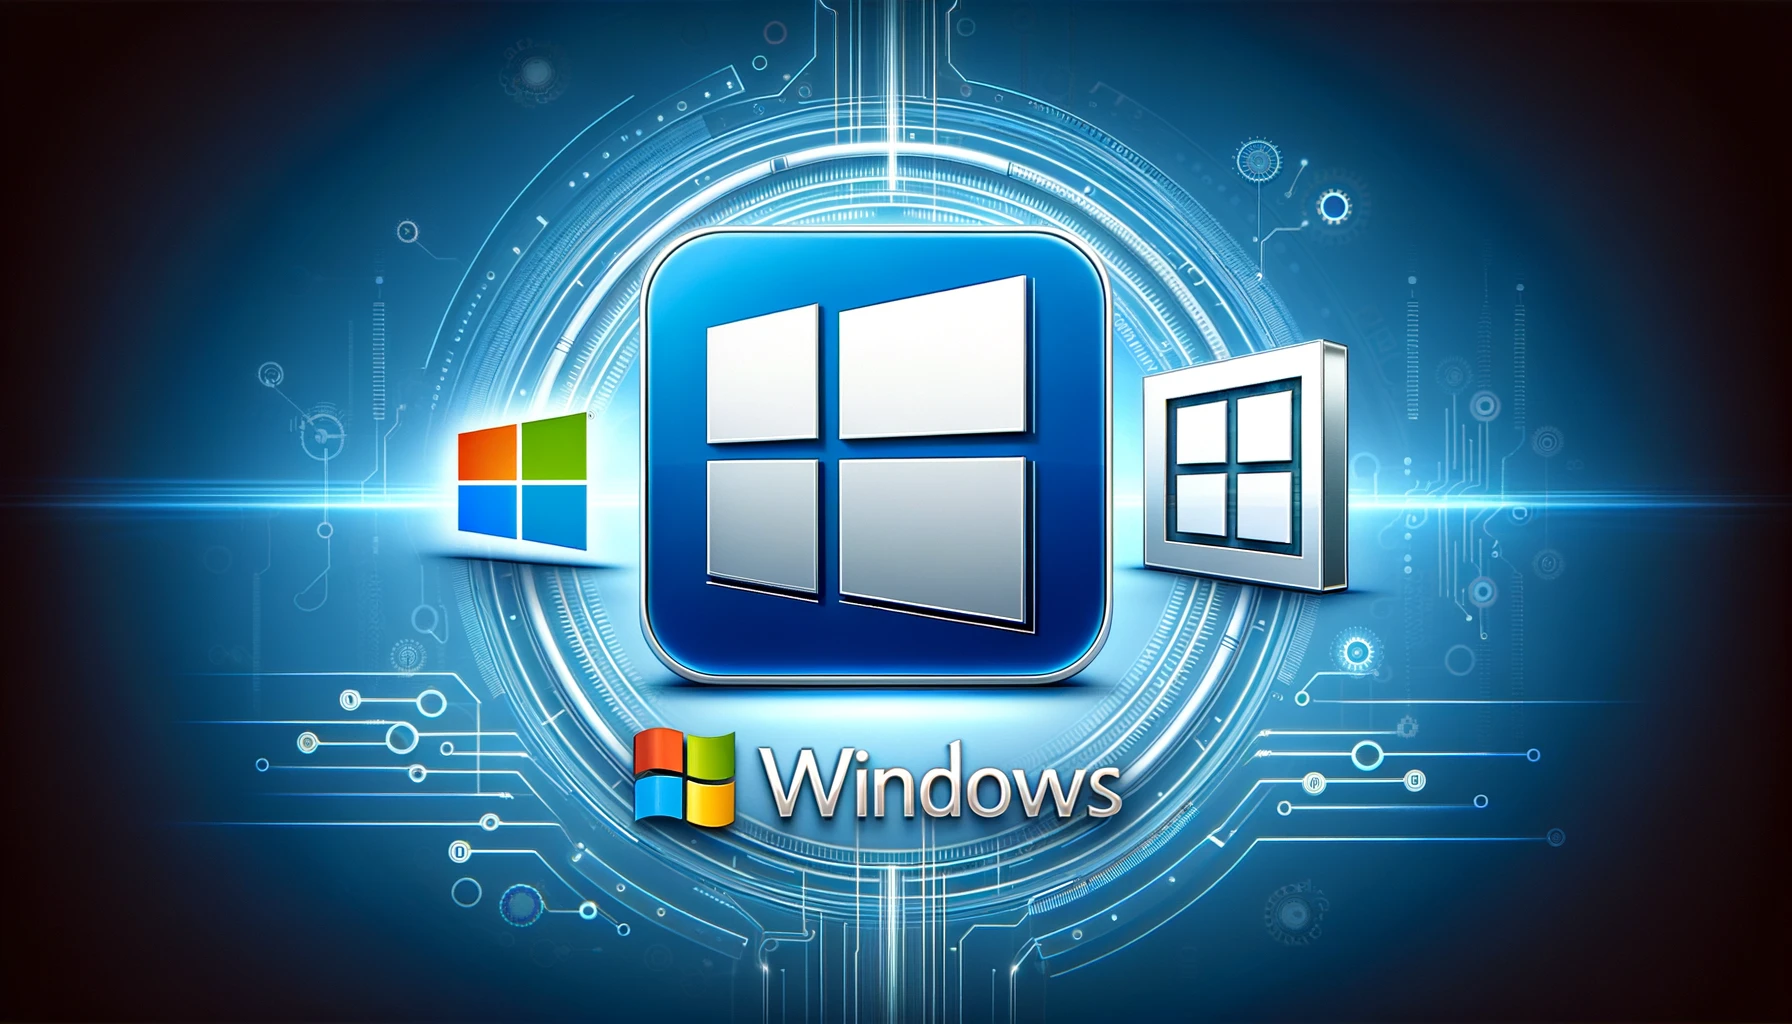 DALL·E 2024-05-19 12.14.48 - A professional and sleek image featuring the original logos of Microsoft Windows 10, Windows 11, and Microsoft Office 365. The image includes the logo